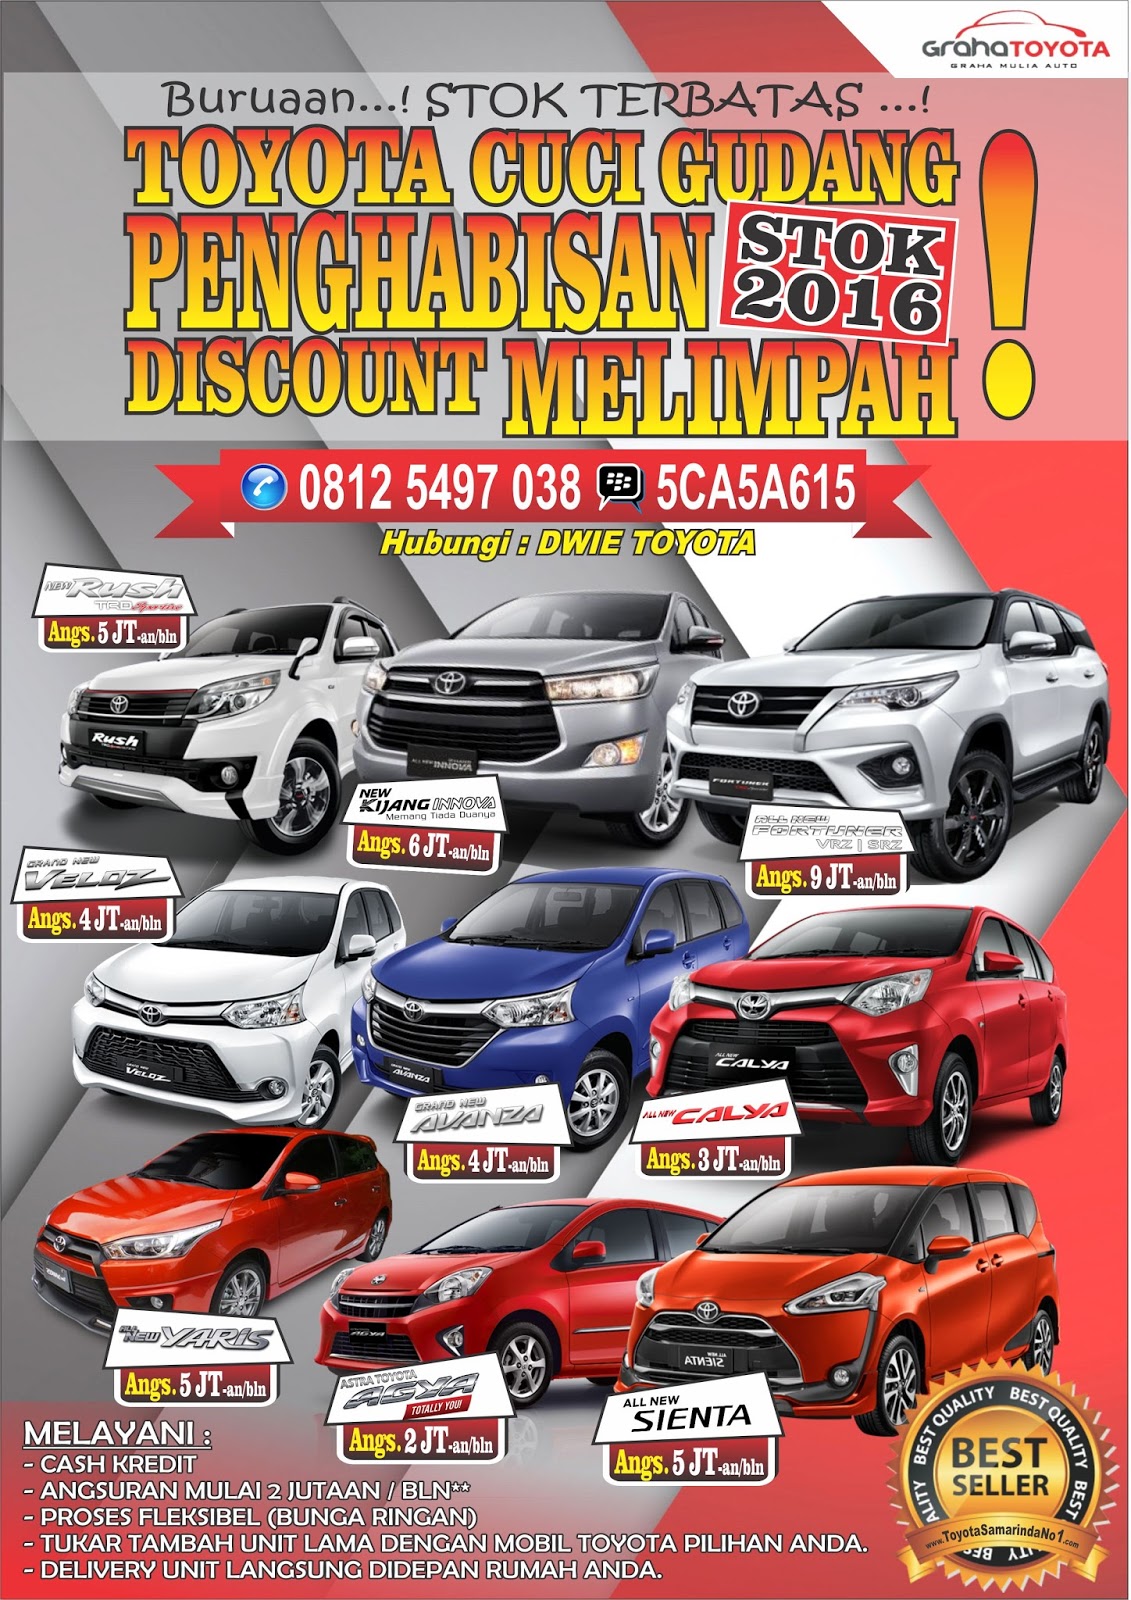 Promo Cuci Gudang Penghabisan Stok 2016 Di Toyota Samarinda No 1 Toyota Samarinda